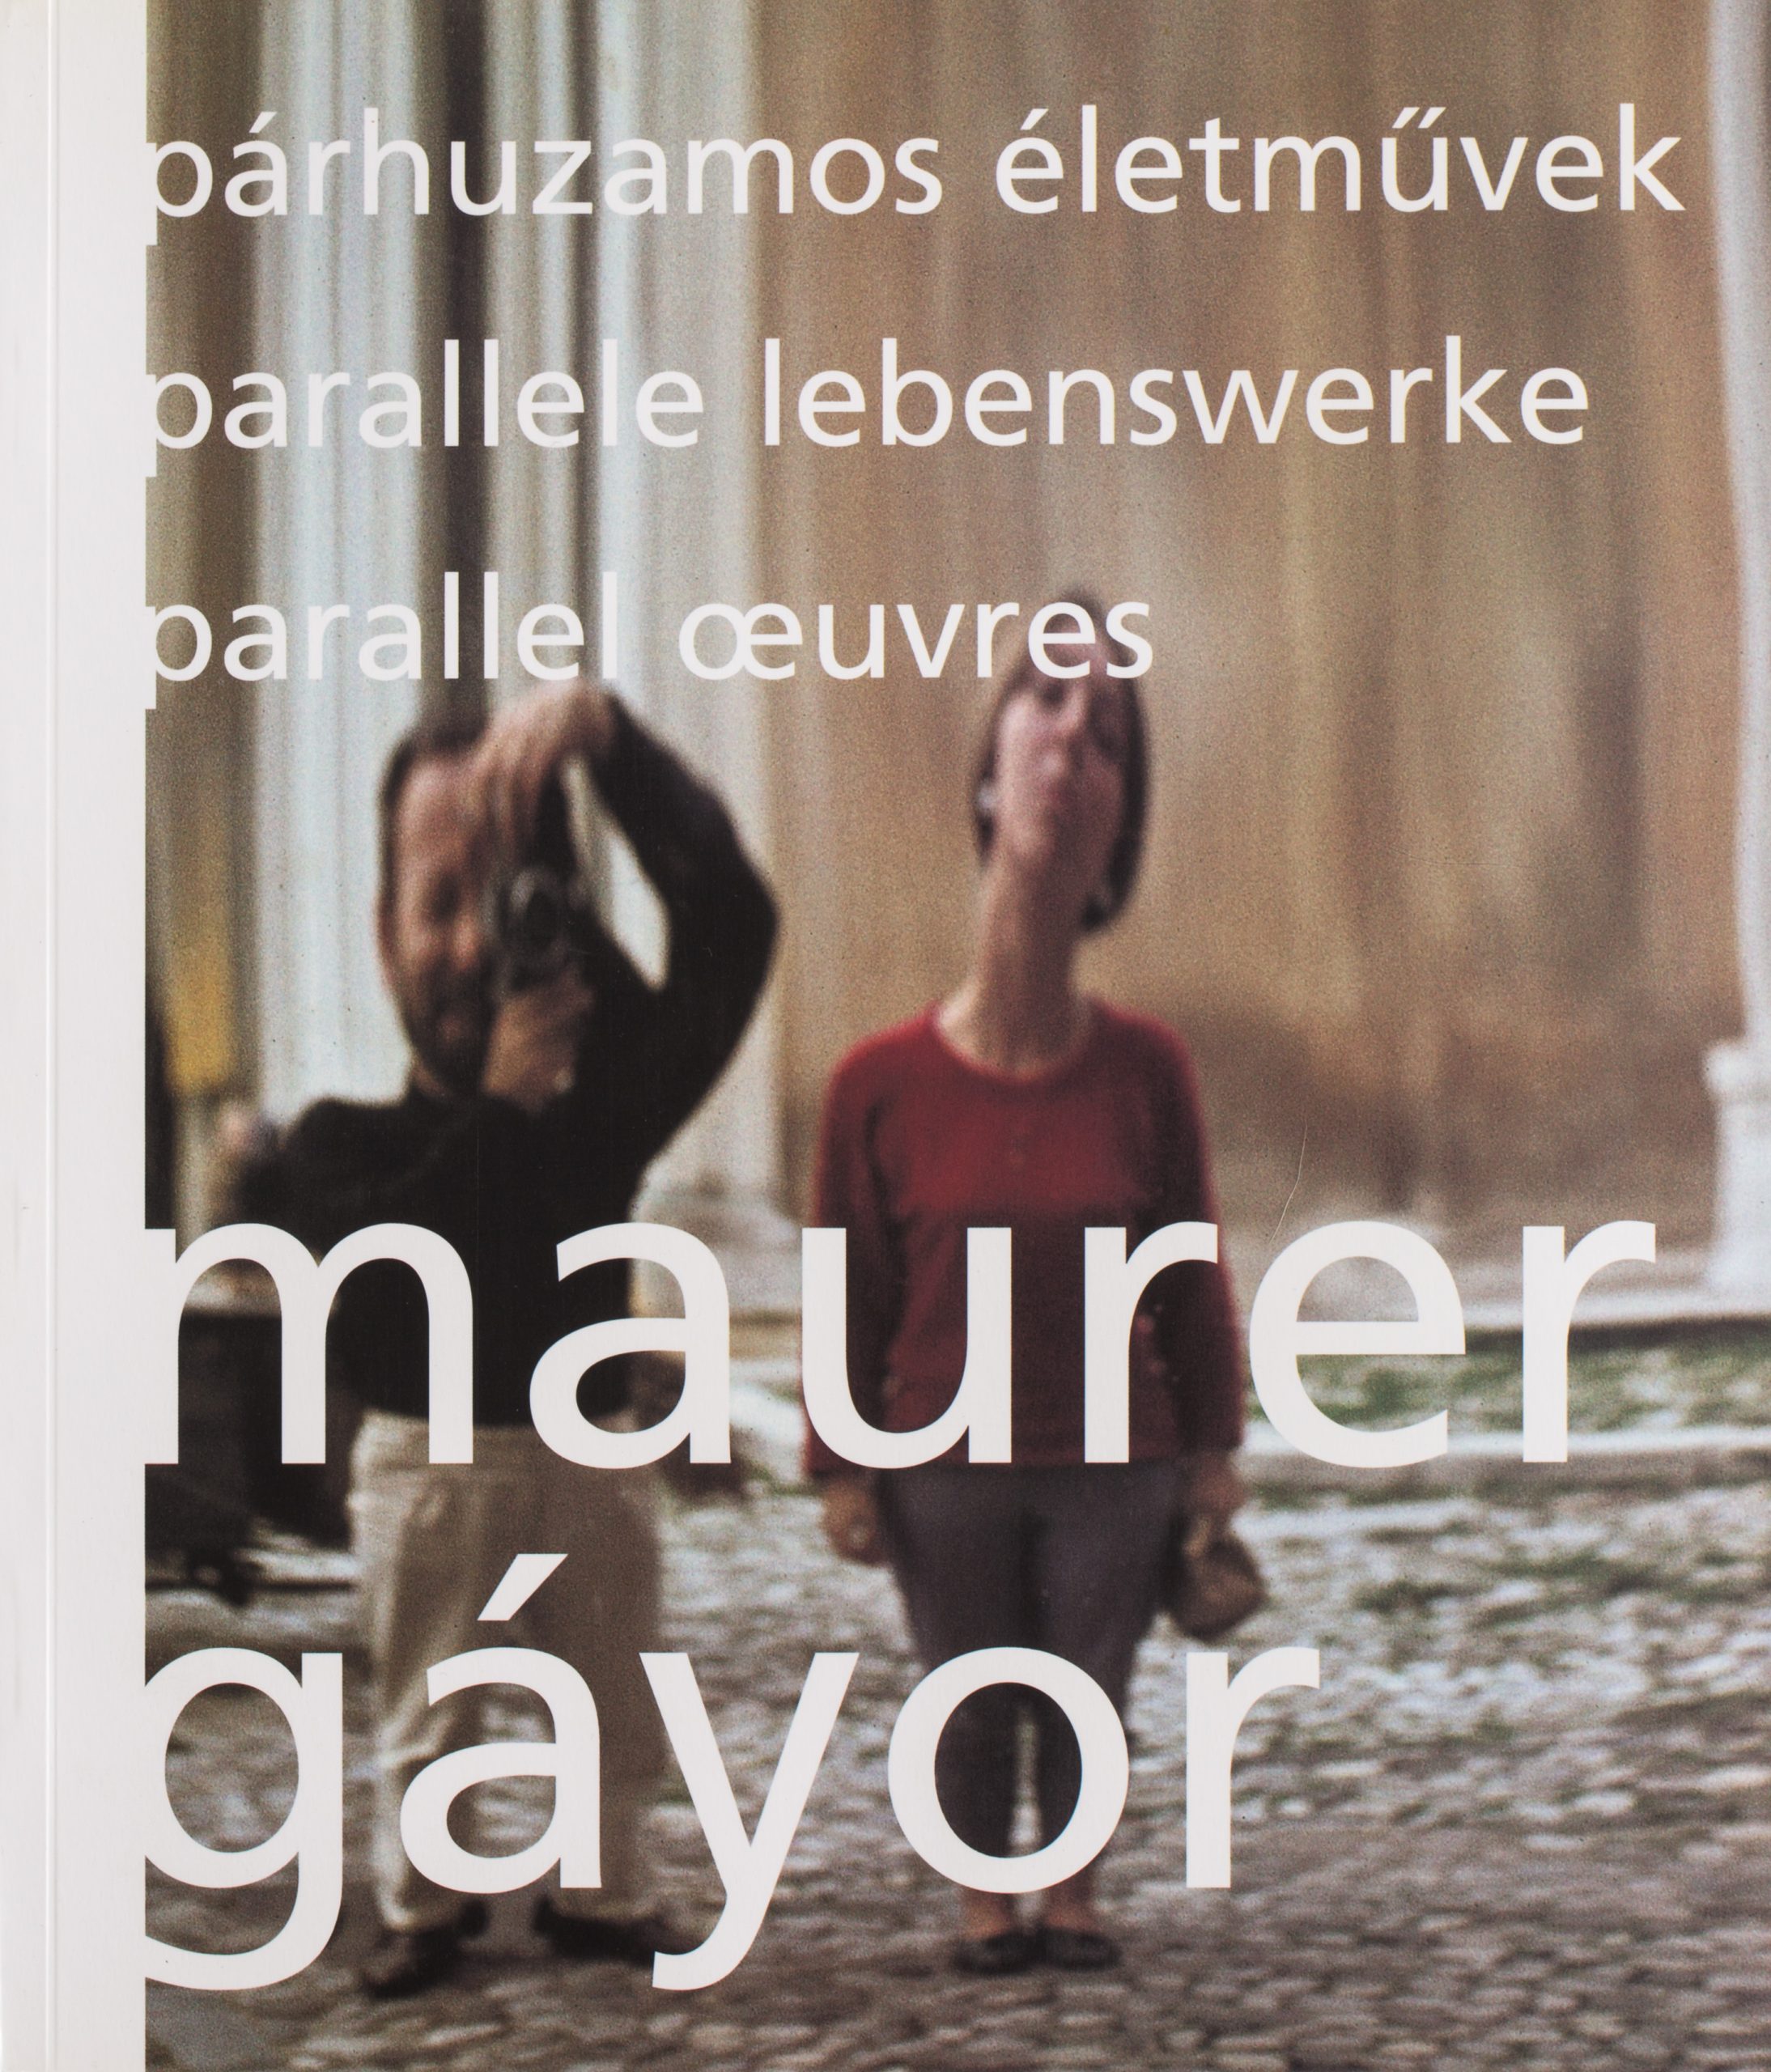 Dóra Maurer - Tibor Gáyor: Parallel Oeuvres